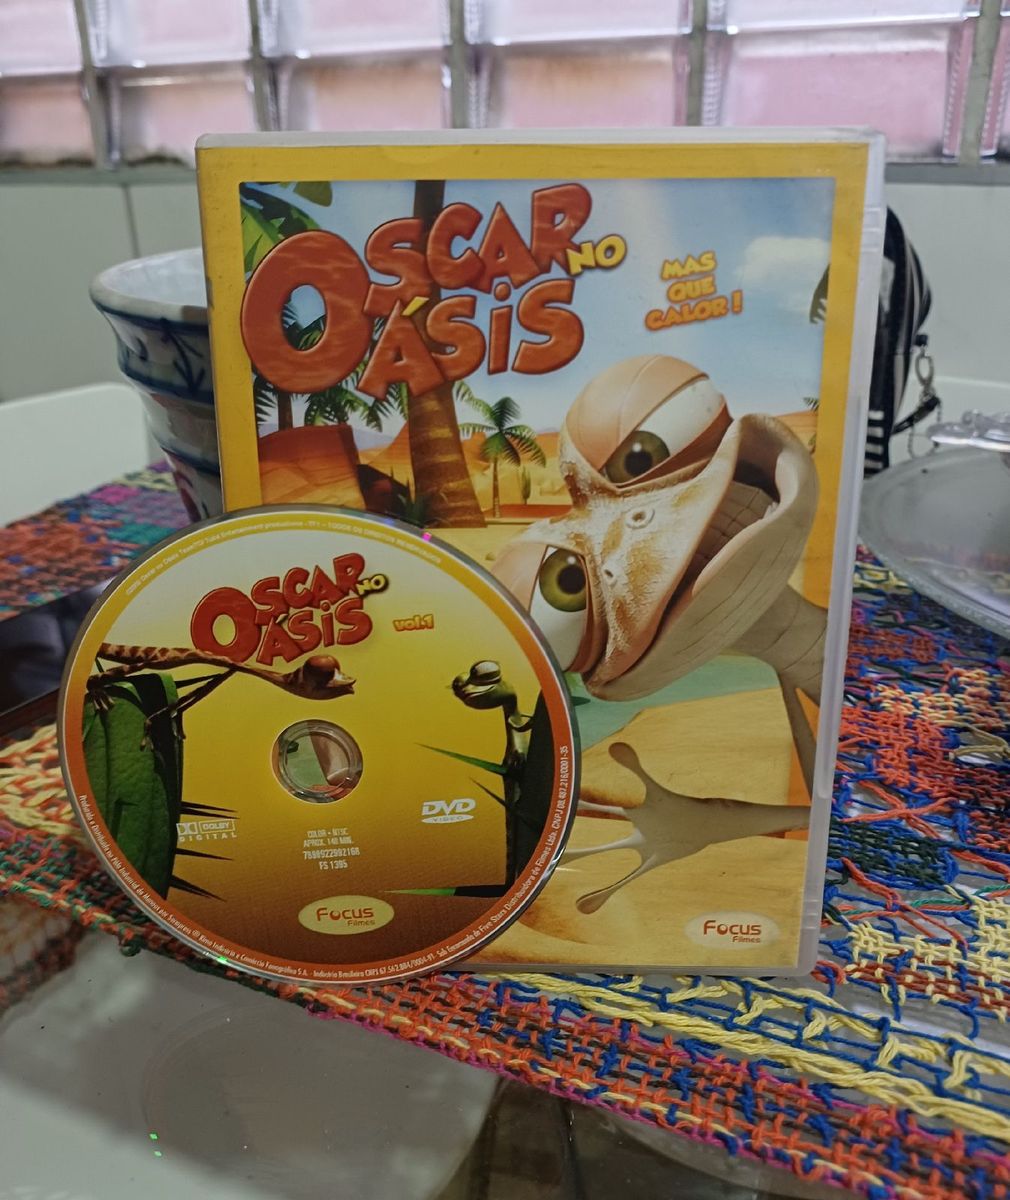 OSCAR'S OASIS VOL.1 [DVD] 